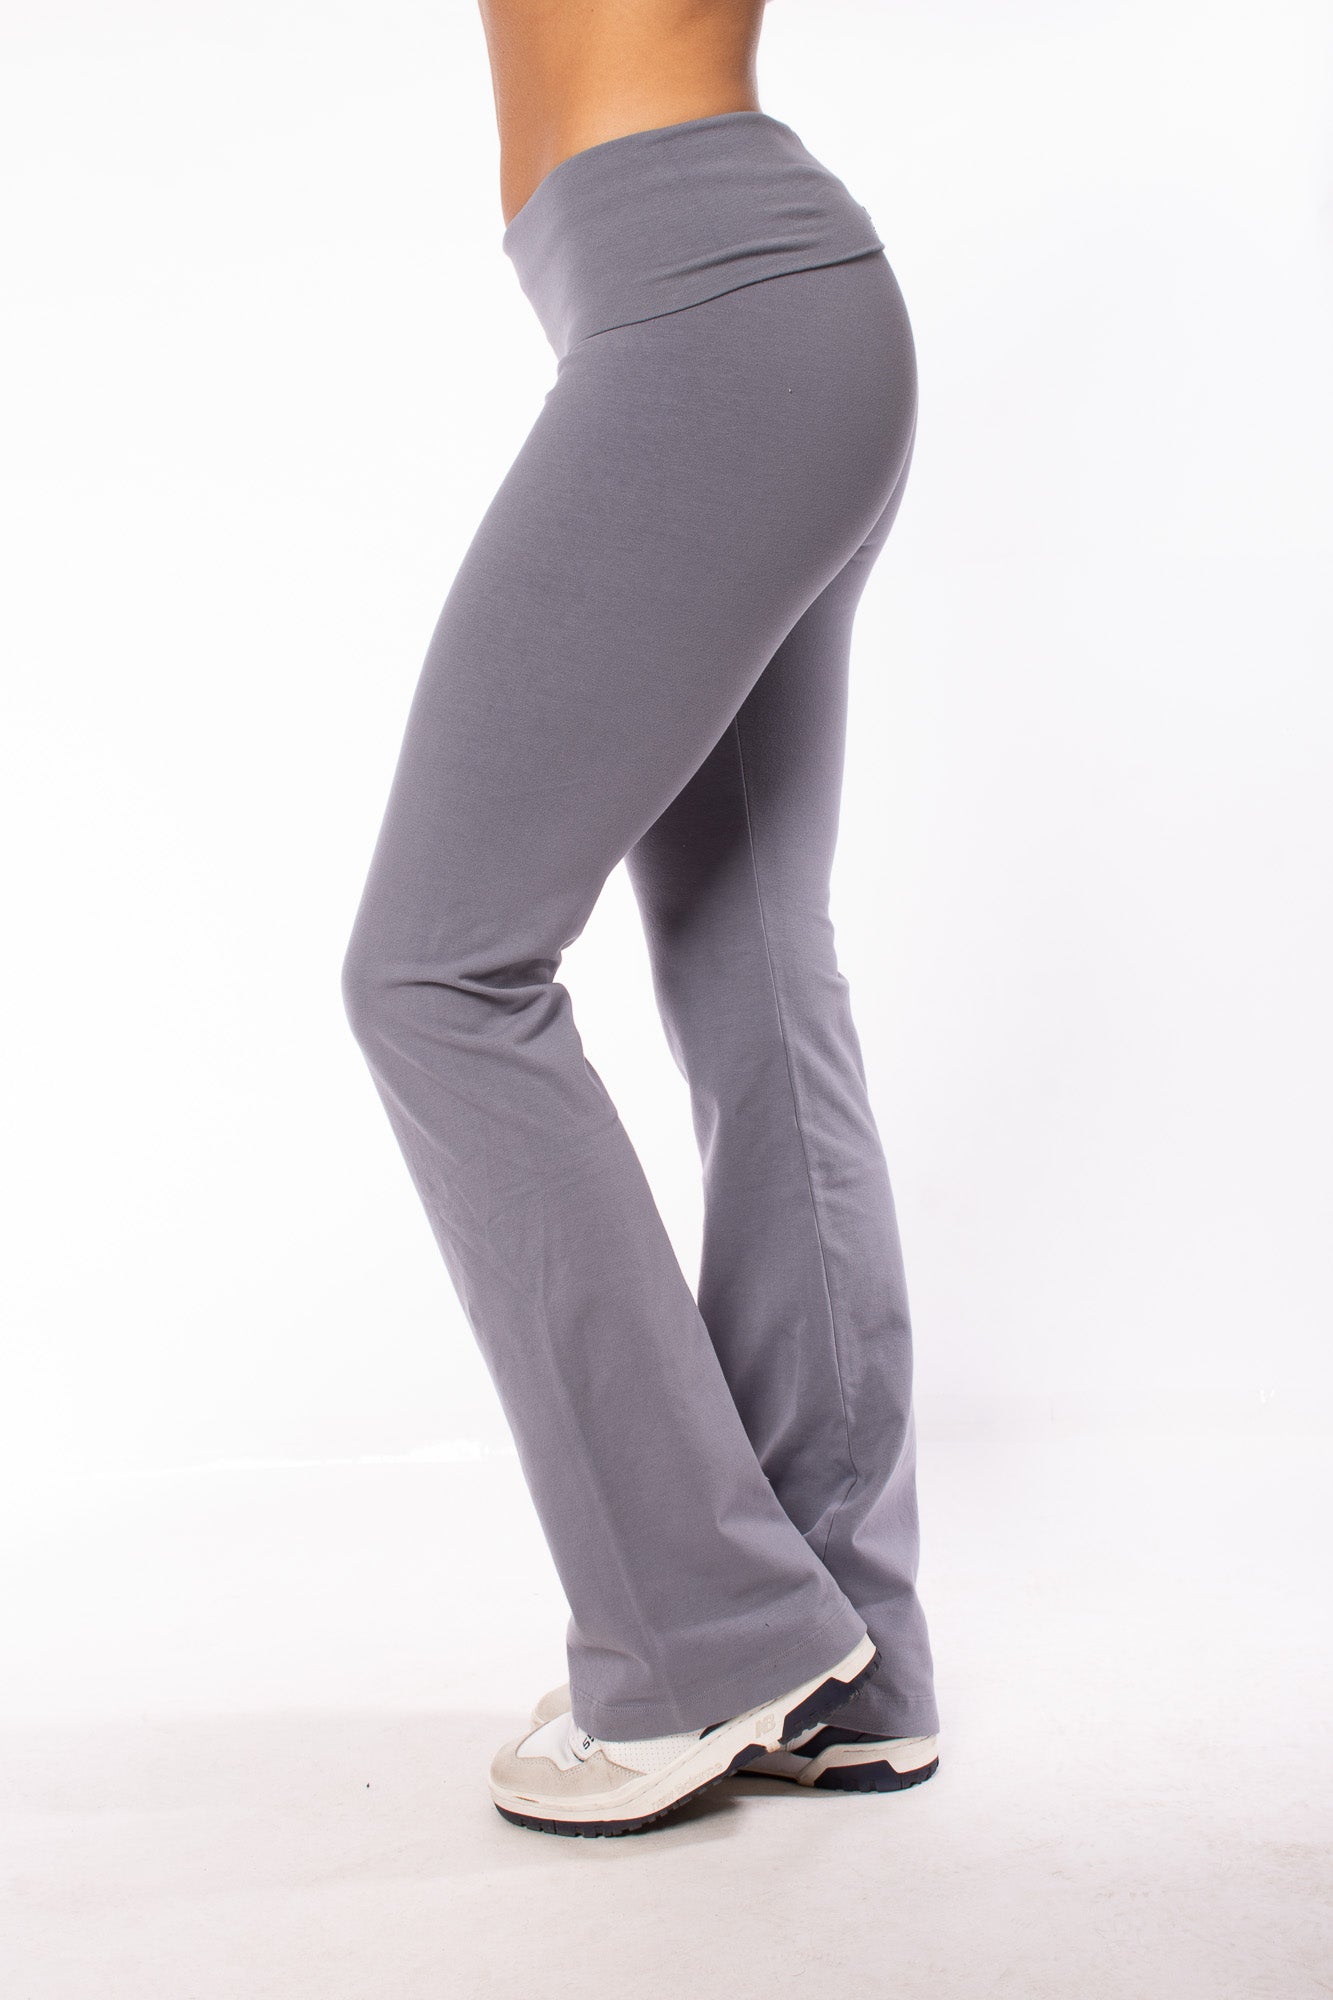 HardTail Rolldown Bootleg Pant - Black  Flare pants, Bootleg pants,  Comfortable yoga pants